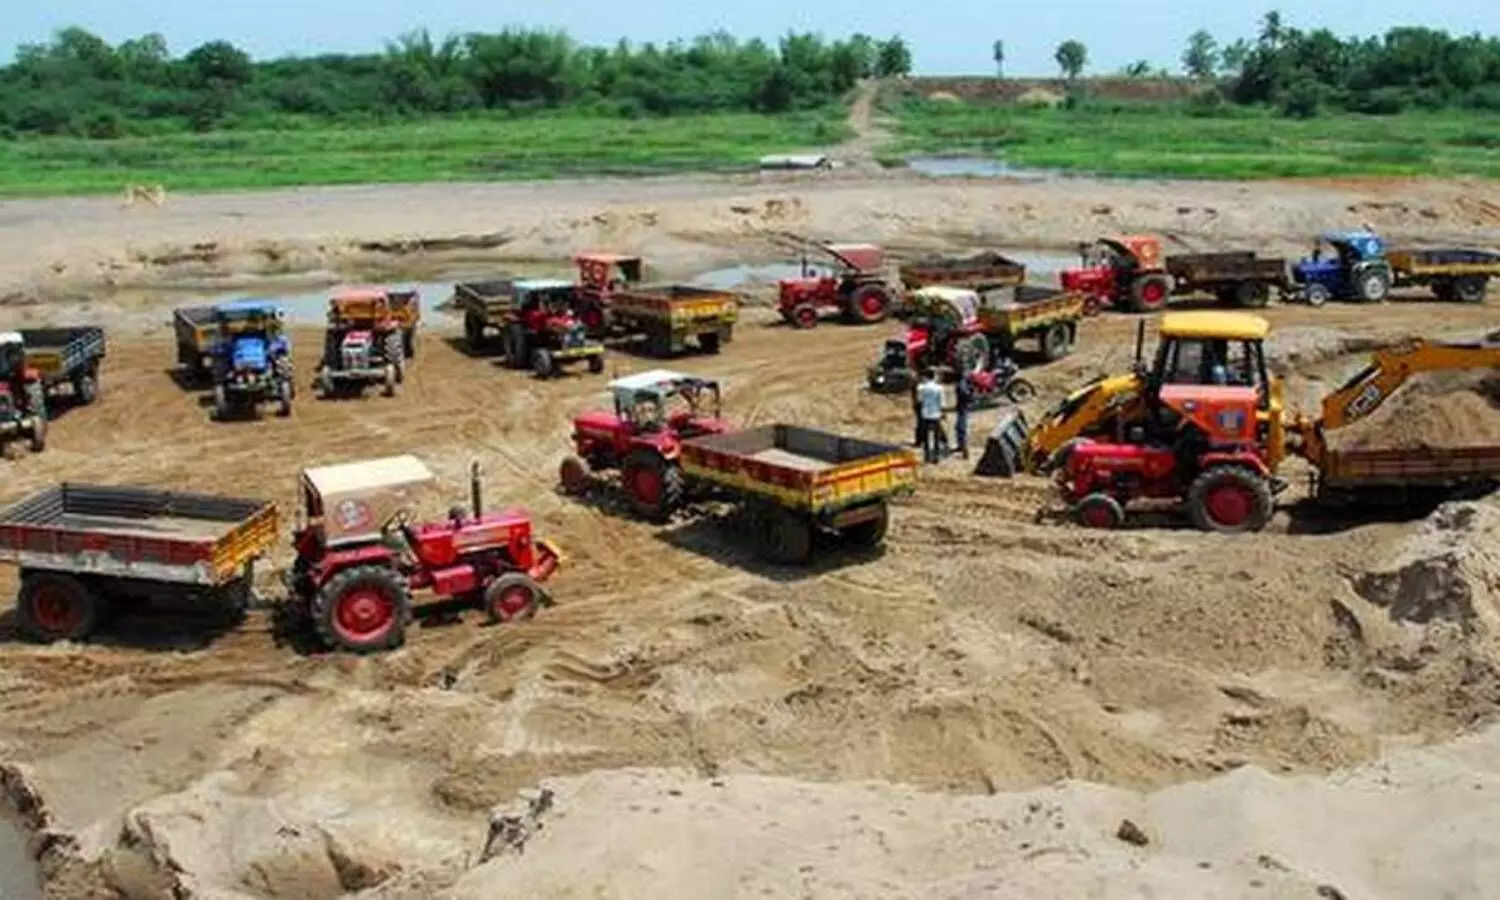 Principal secretary defends selection of Jayaprakash Power Ventures for sand mining contract